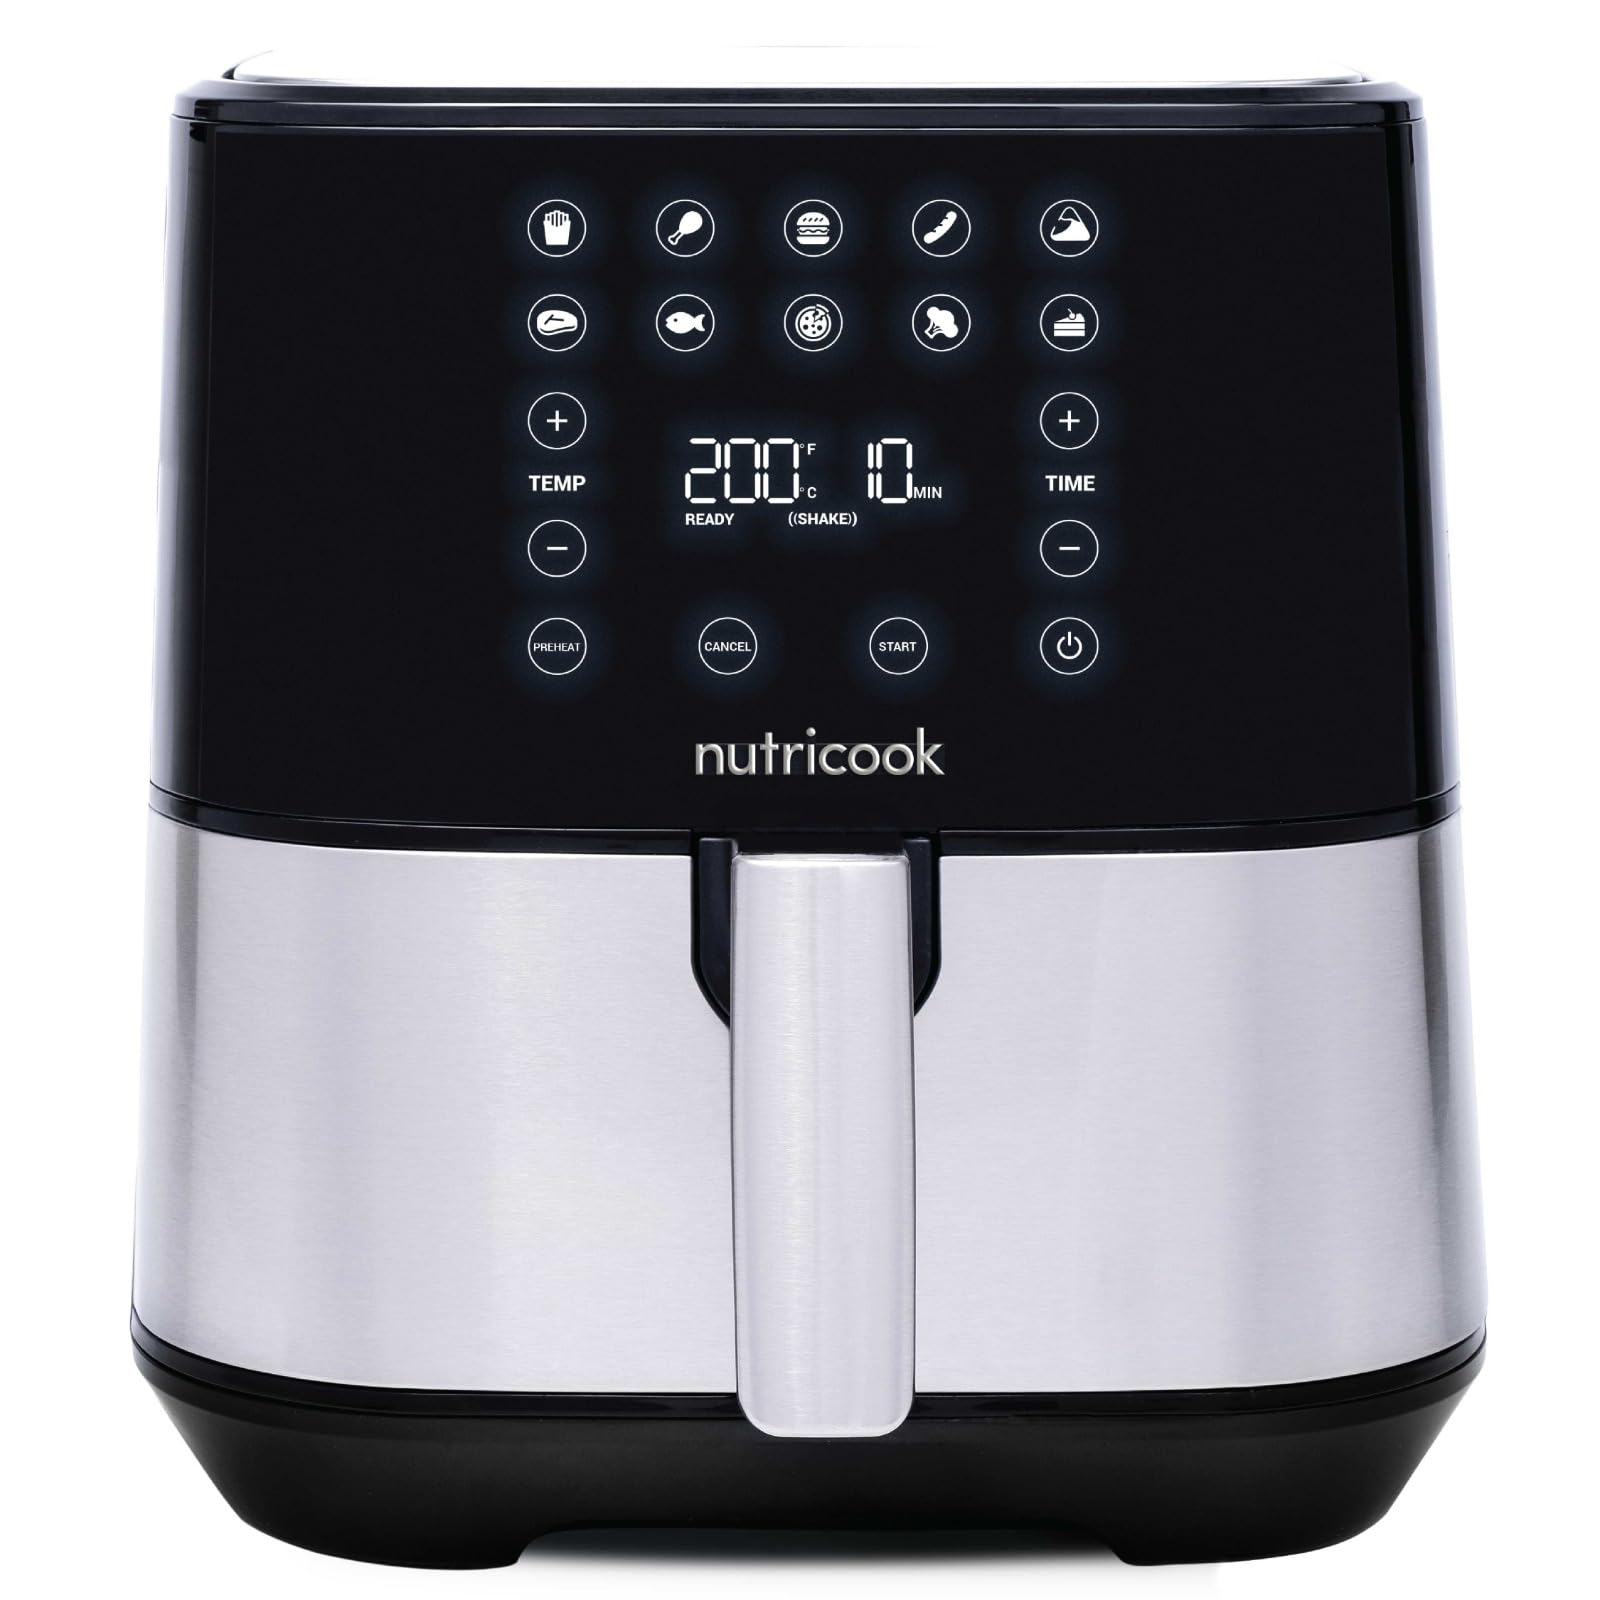 Nutricook Air Fryer 2، 5.5 لیتر، 1700 وات، نمایشگر پنل کنترل دیجیتال، 10 برنامه از پیش تعیین شده با عملکرد پیش گرمایش داخلی، فولاد ضد زنگ + خردکن CRED 650 میلی لیتر، 2 سال گارانتی، انحصاری آمازون